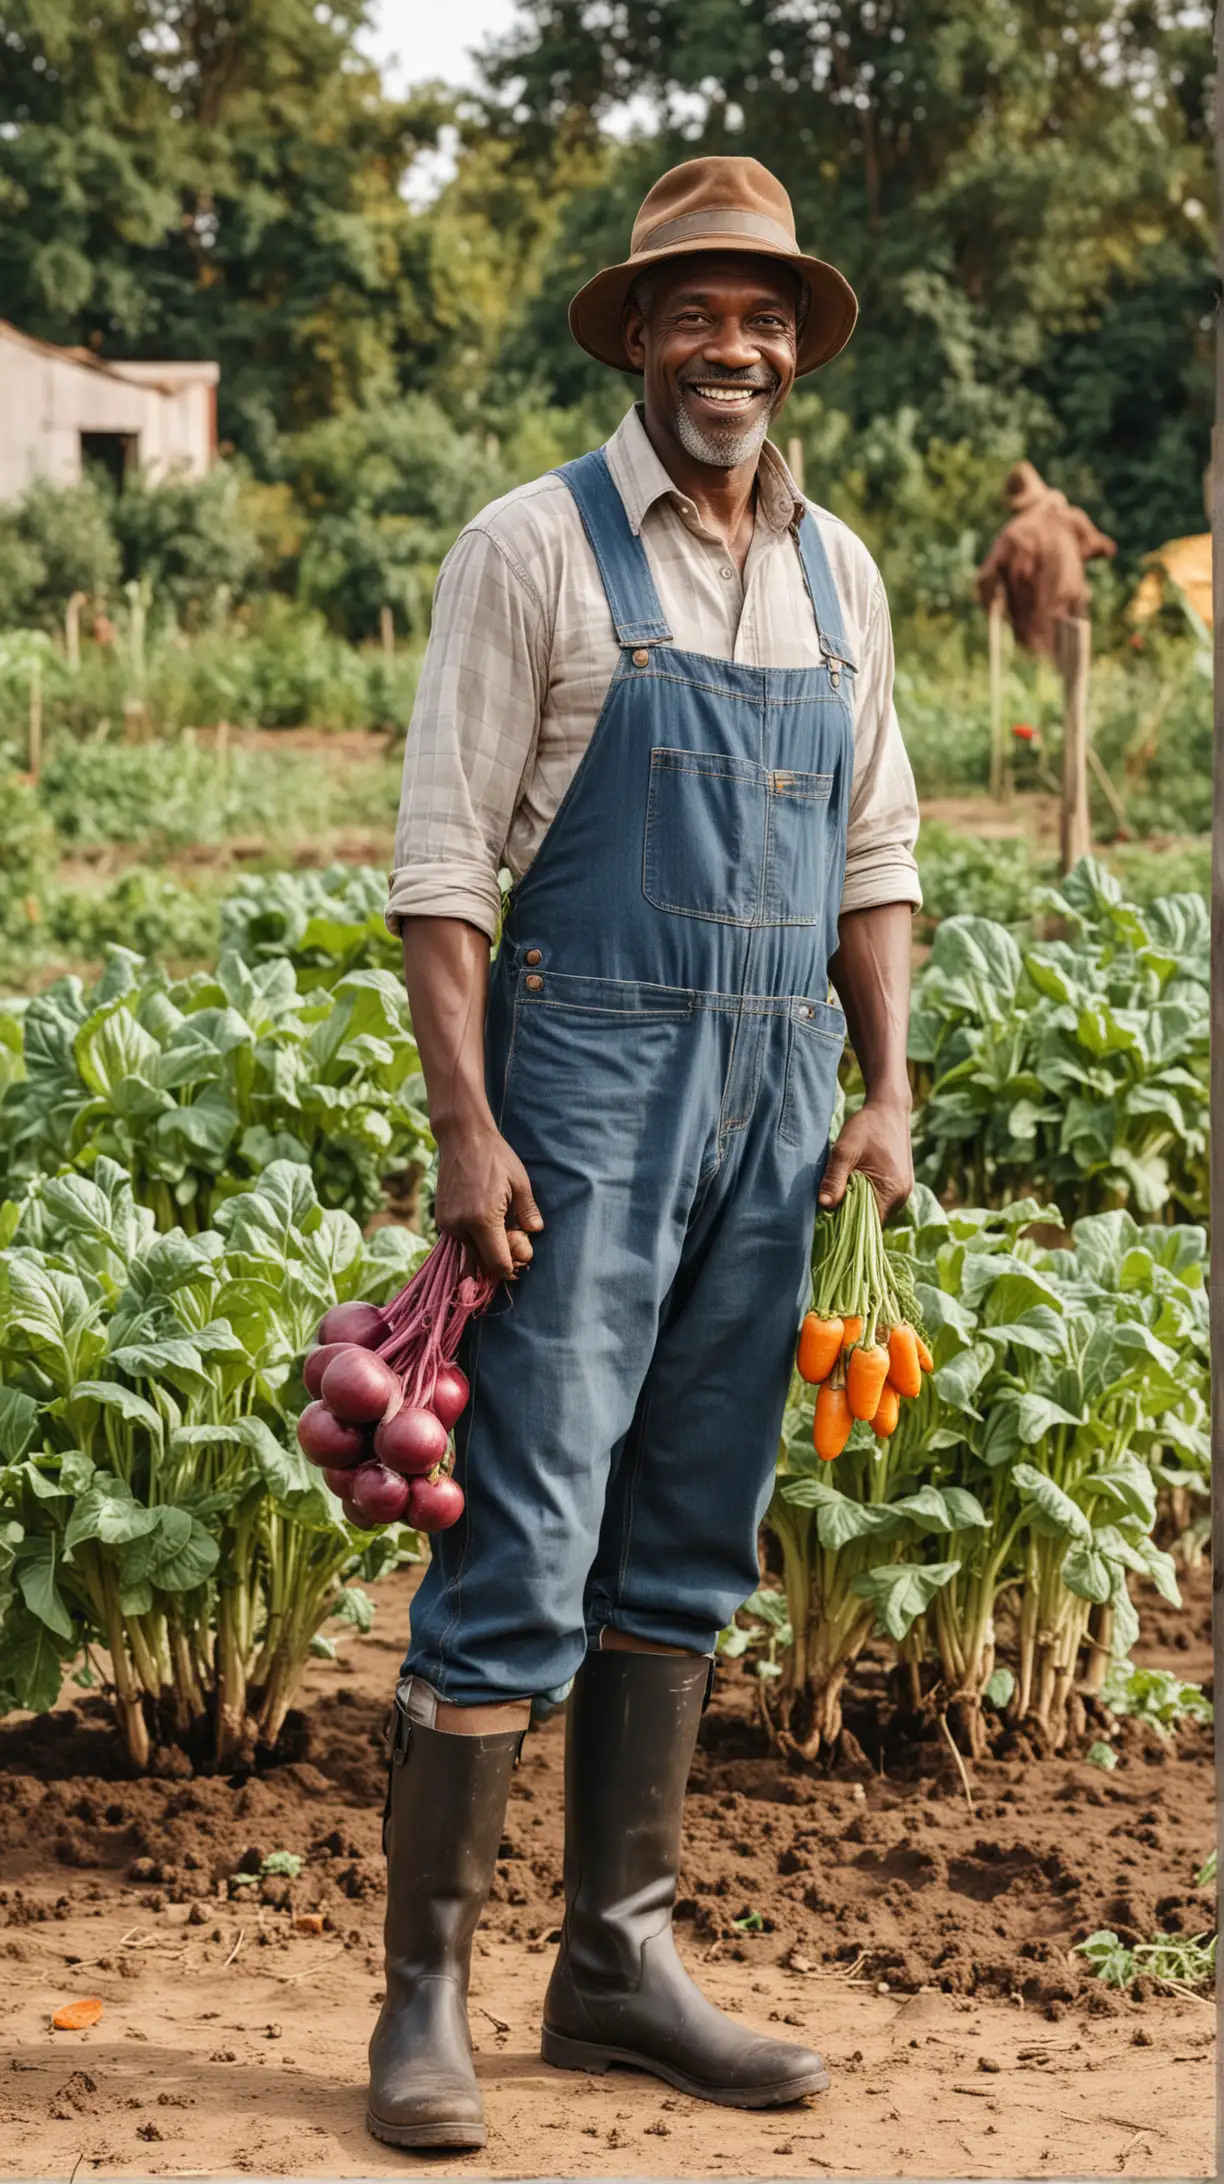 Joyful African Farmer in Boots with Fresh Produce